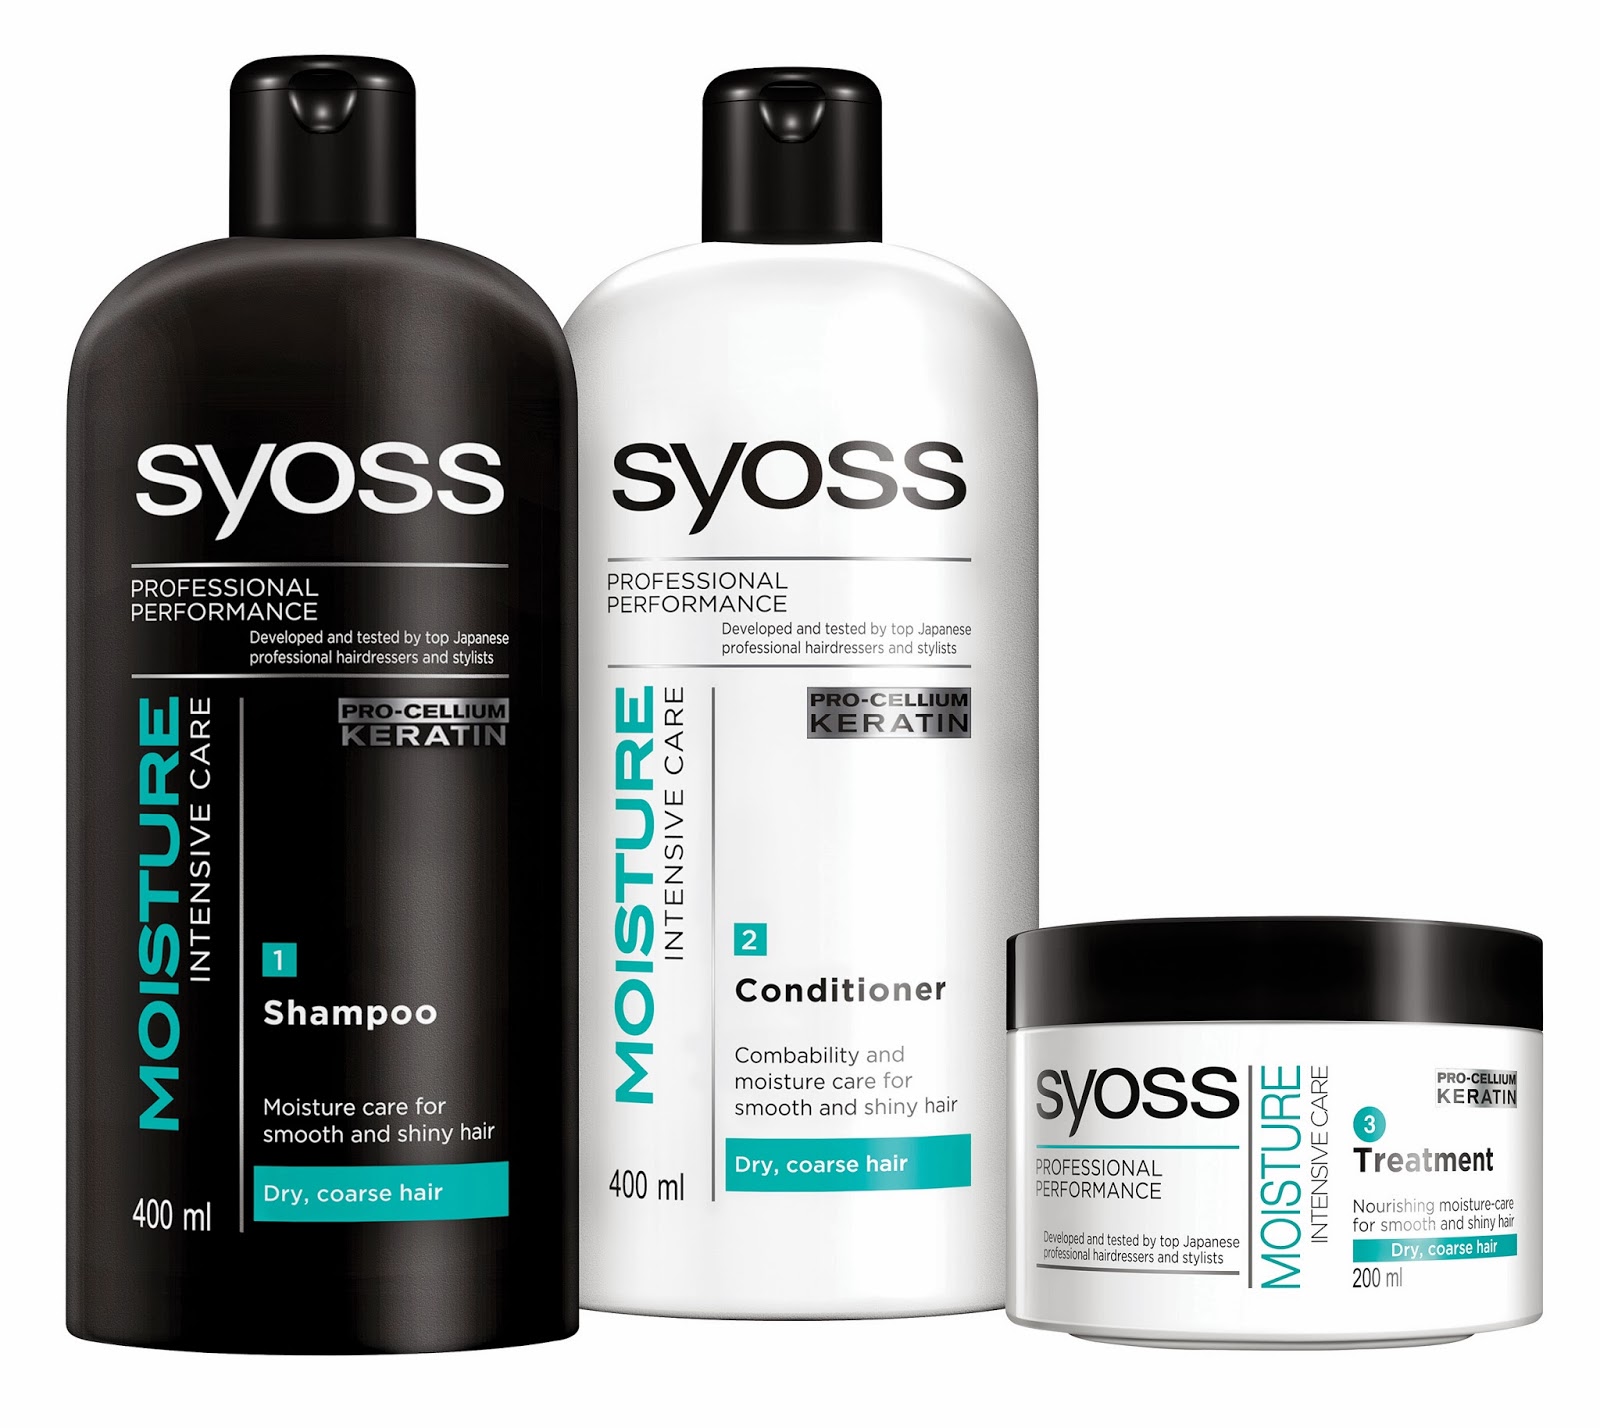 gesmolten Uitroepteken Onderbreking New Hair Care SYOSS is now available in Malaysia - JennGorgeous